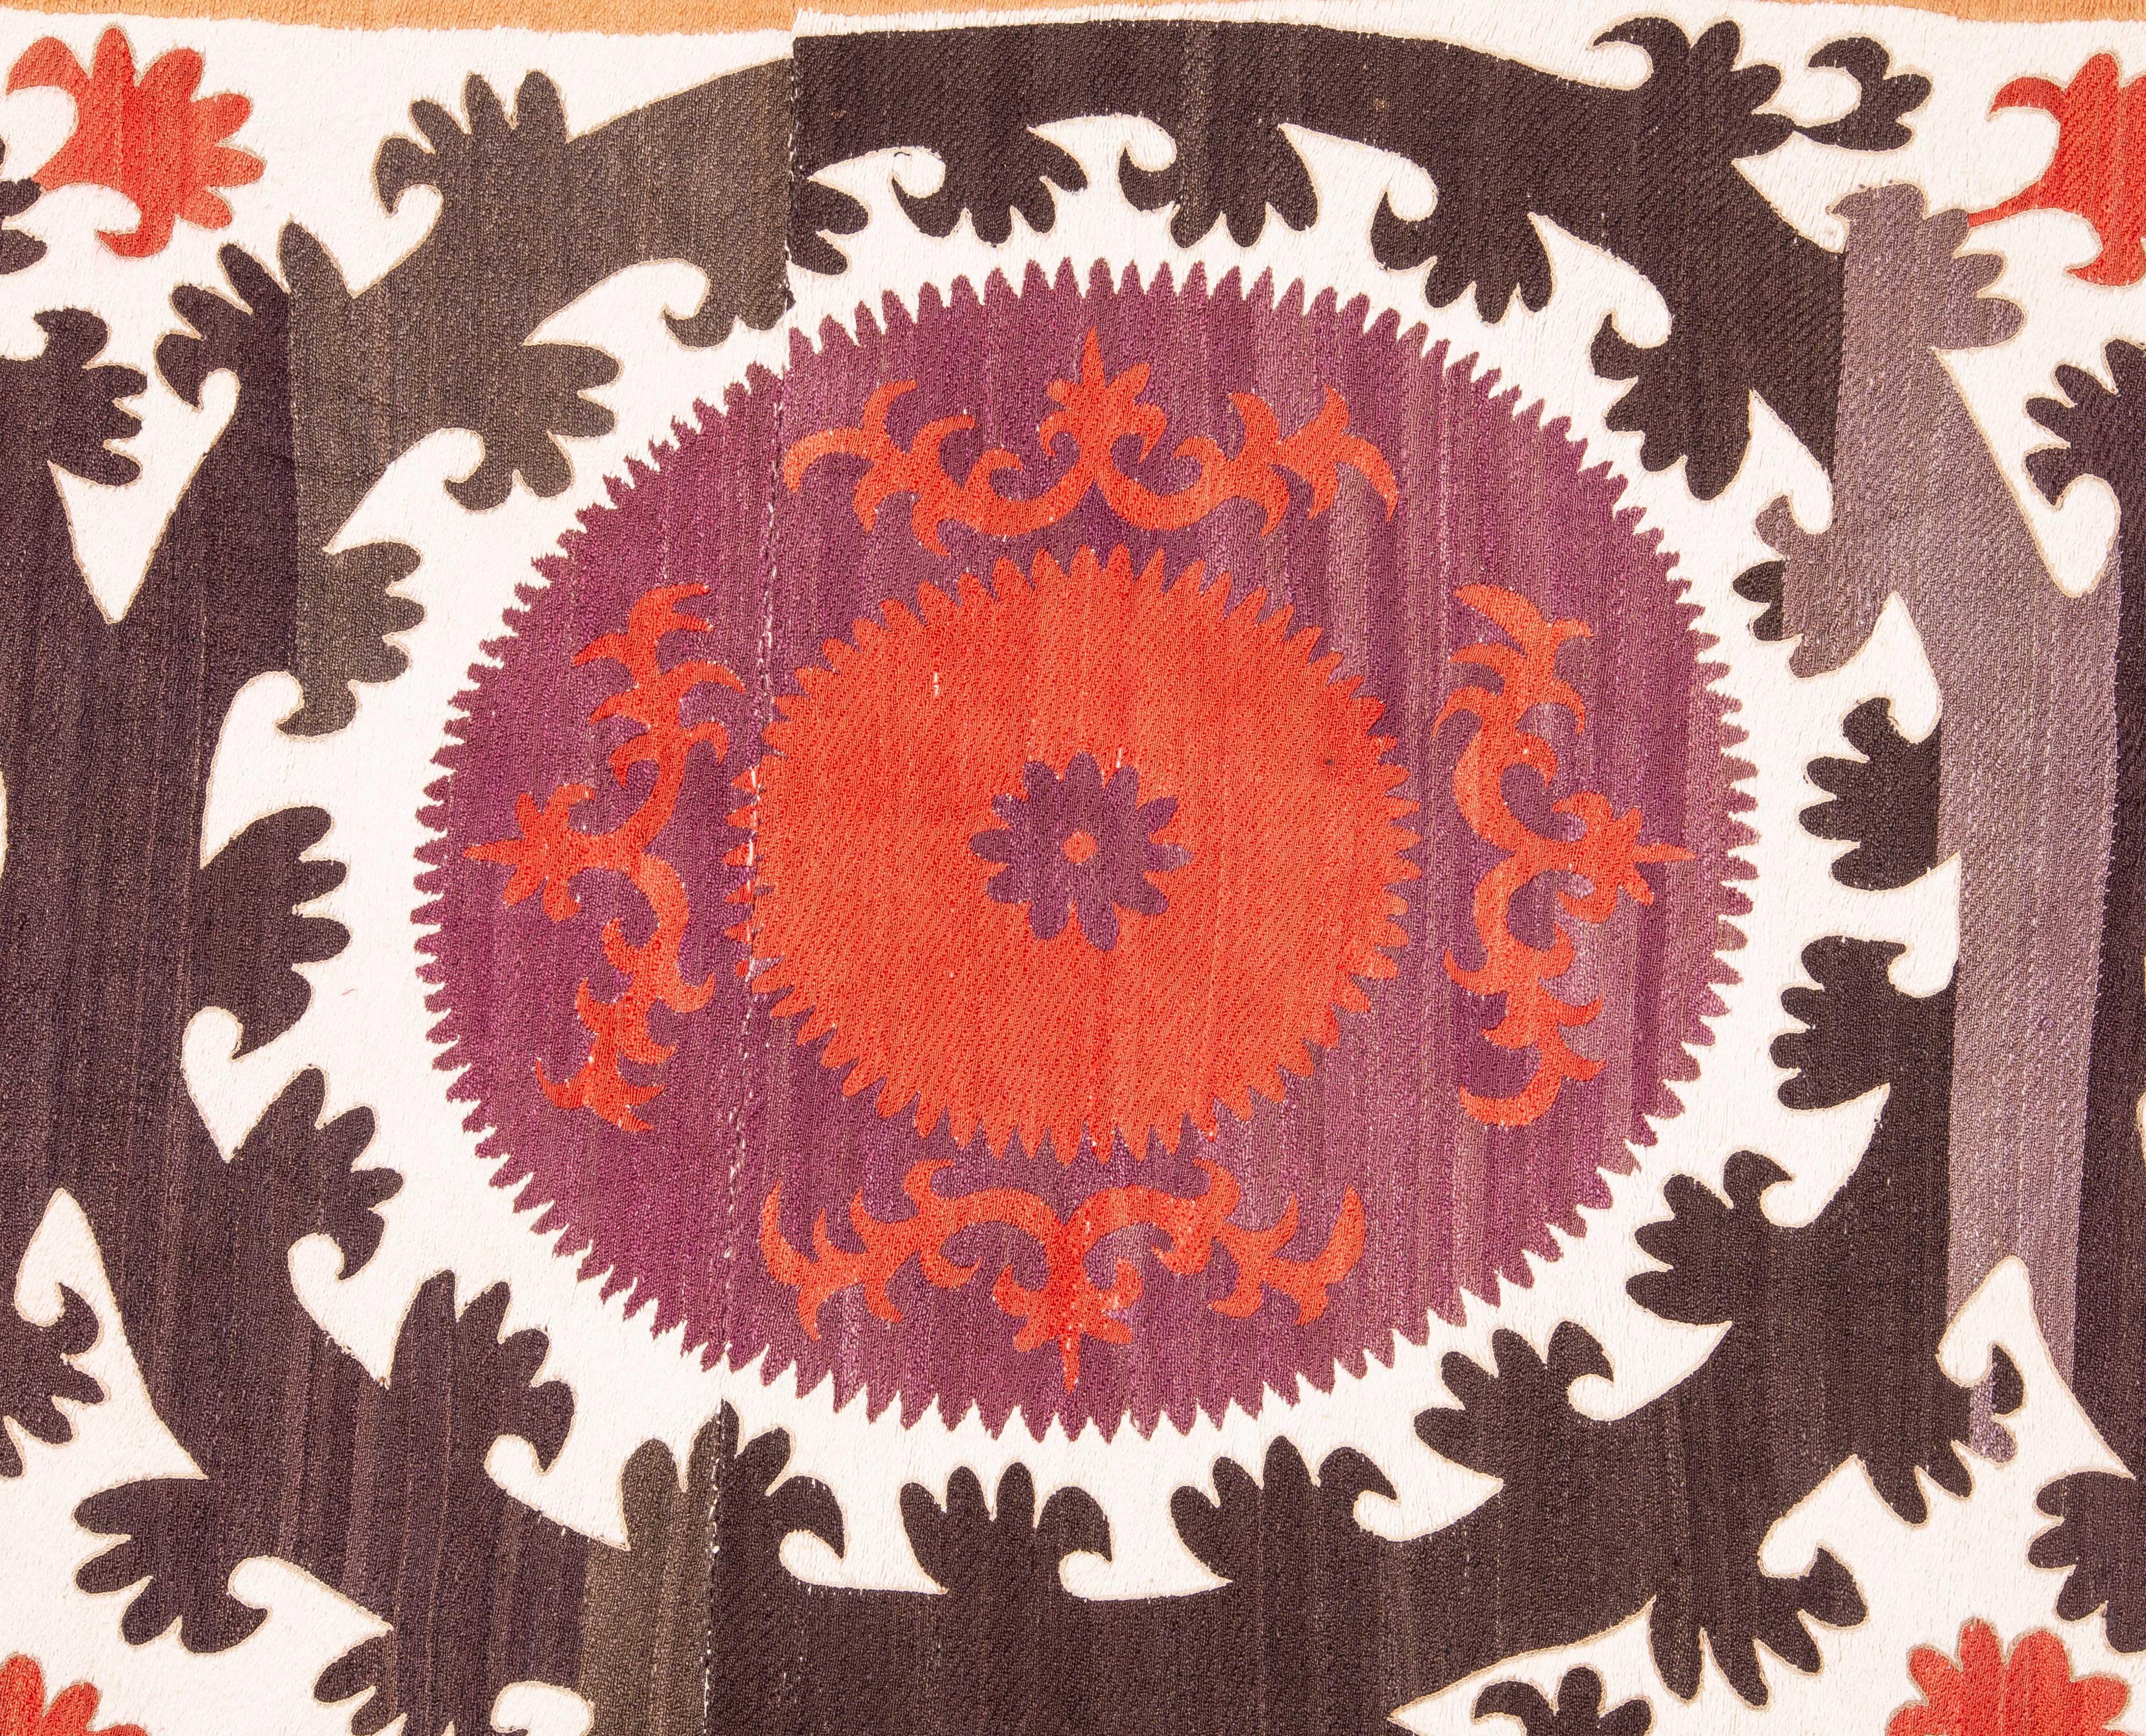 Embroidered Antique Suzani from Samarkand Uzbekistan, Early 20th Century